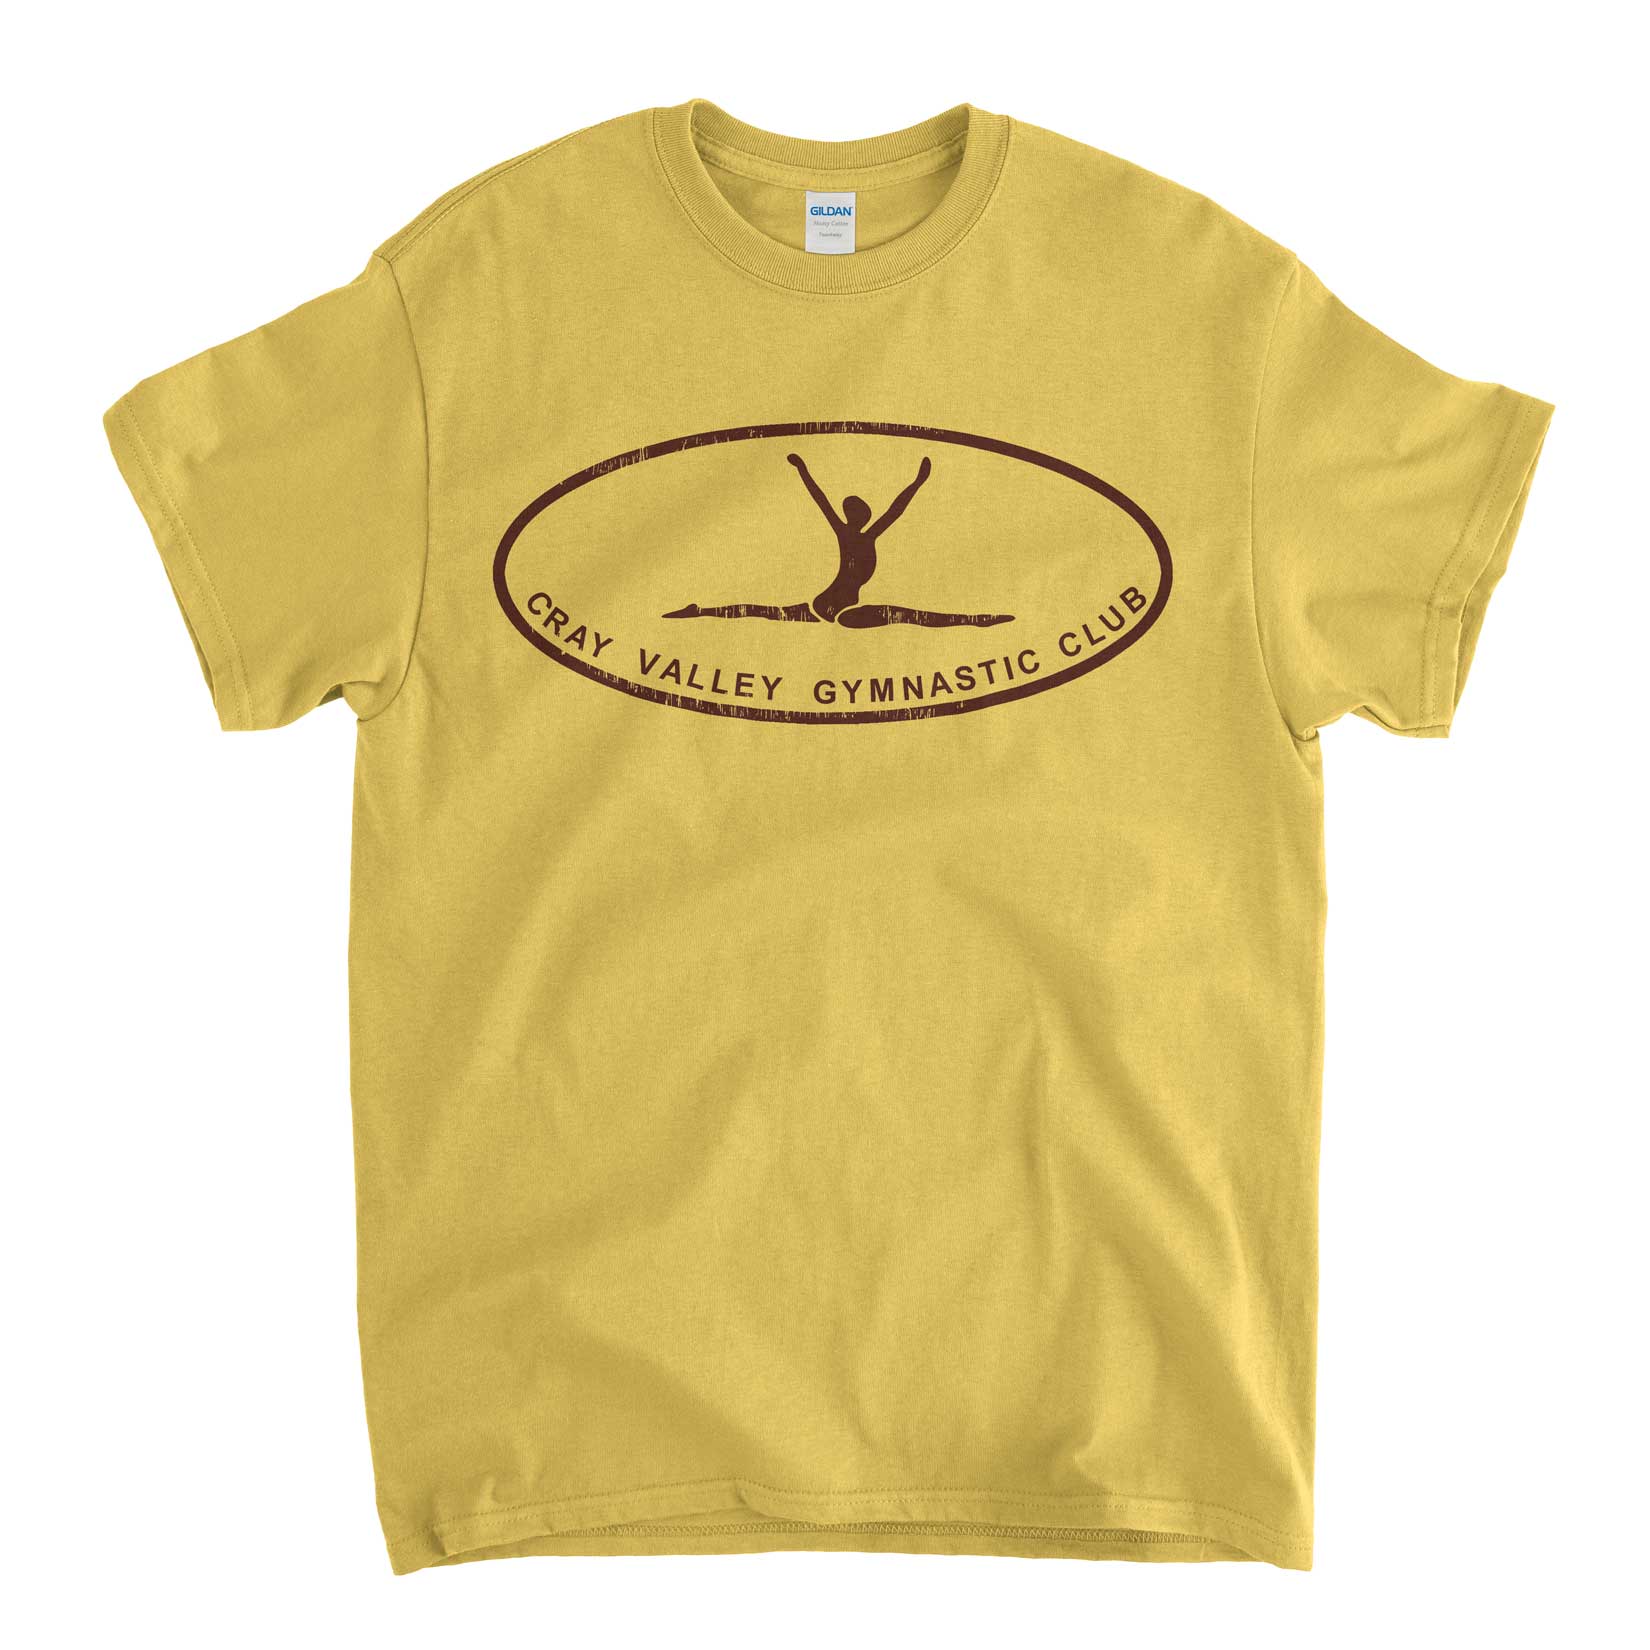 Cray Valley Gymnastic Club T Shirt - As Worn By Ian Dury